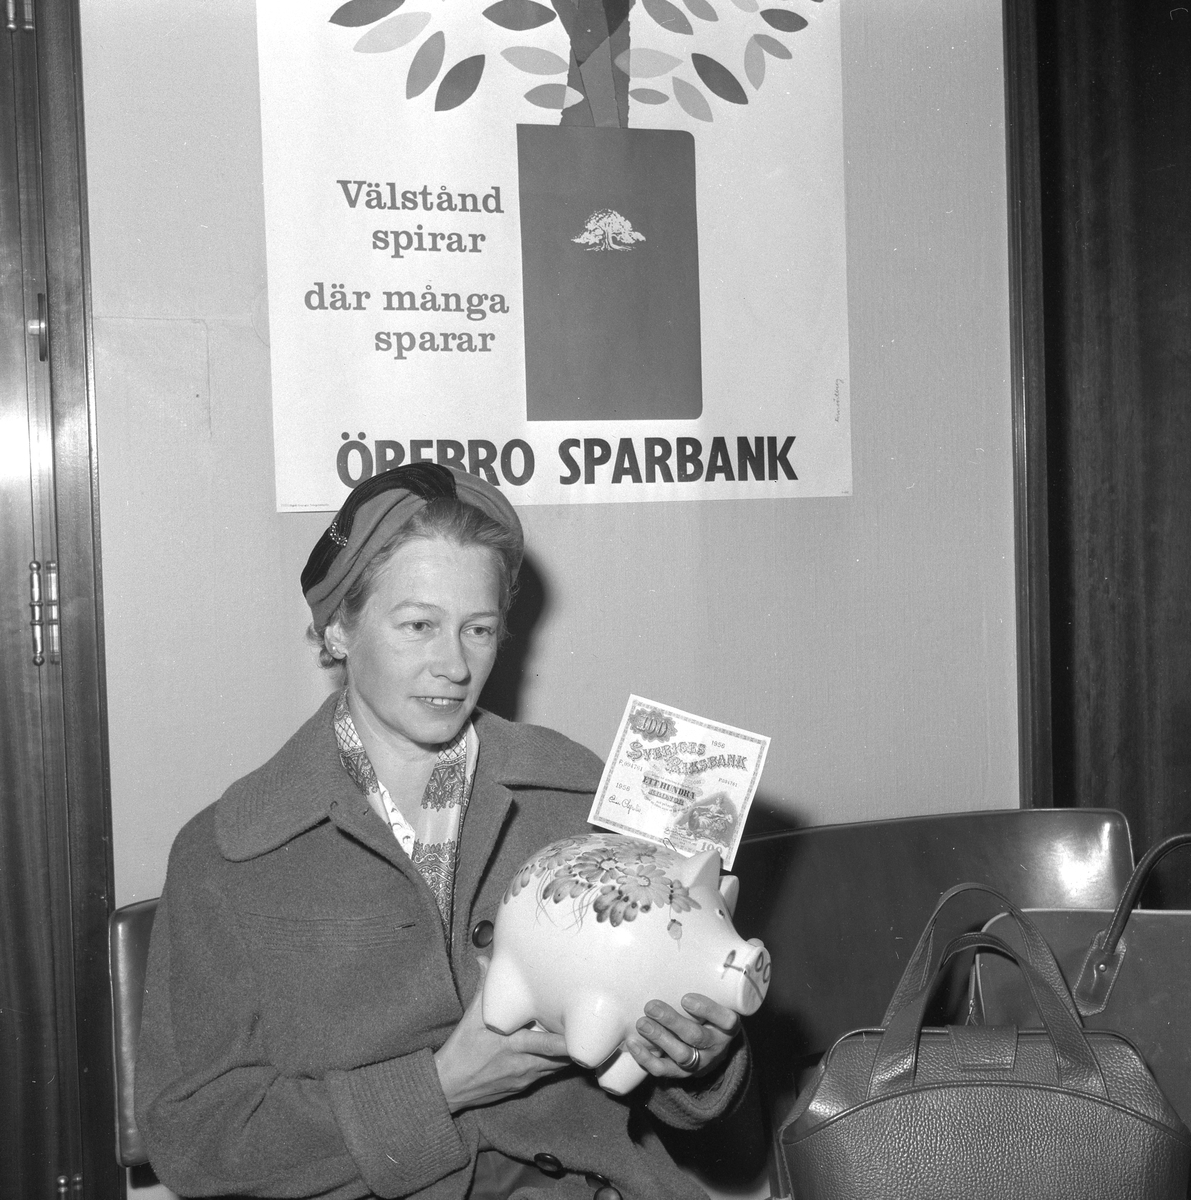 Örebrodam får sparbelöning.
30 oktober 1958.